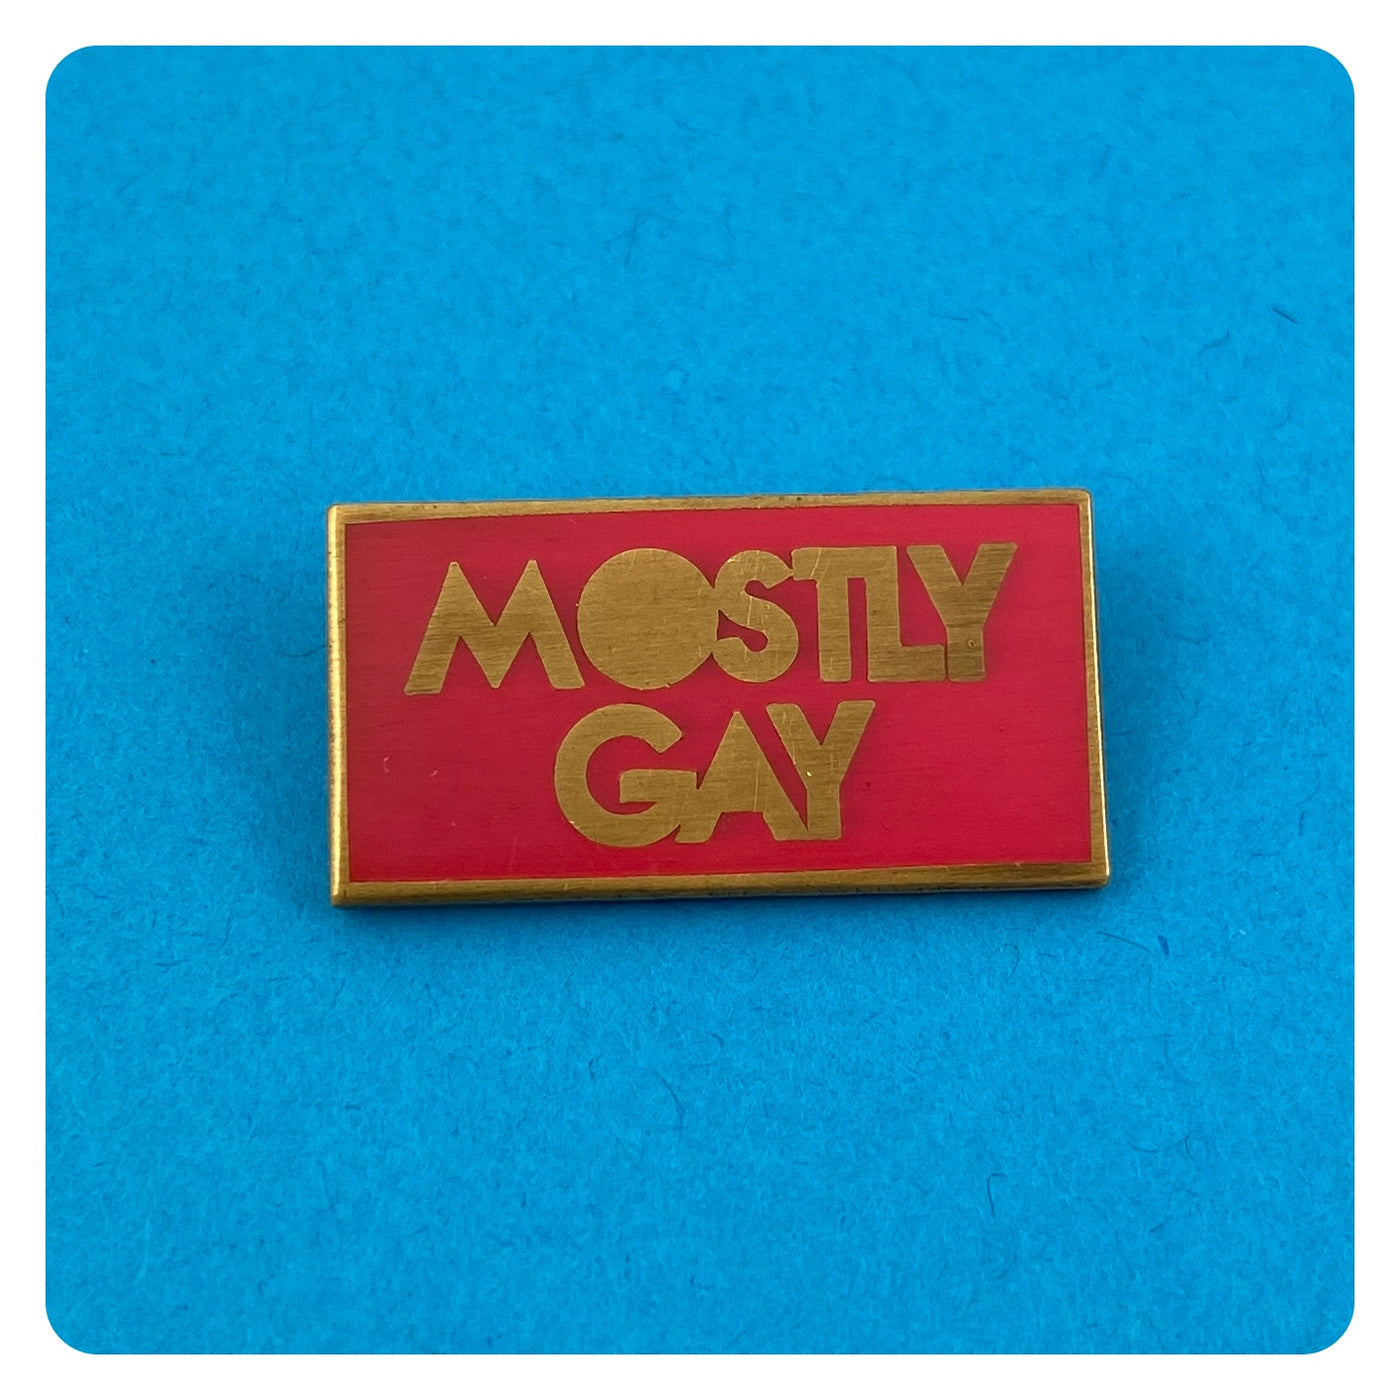 Mostly Gay Enamel Pin